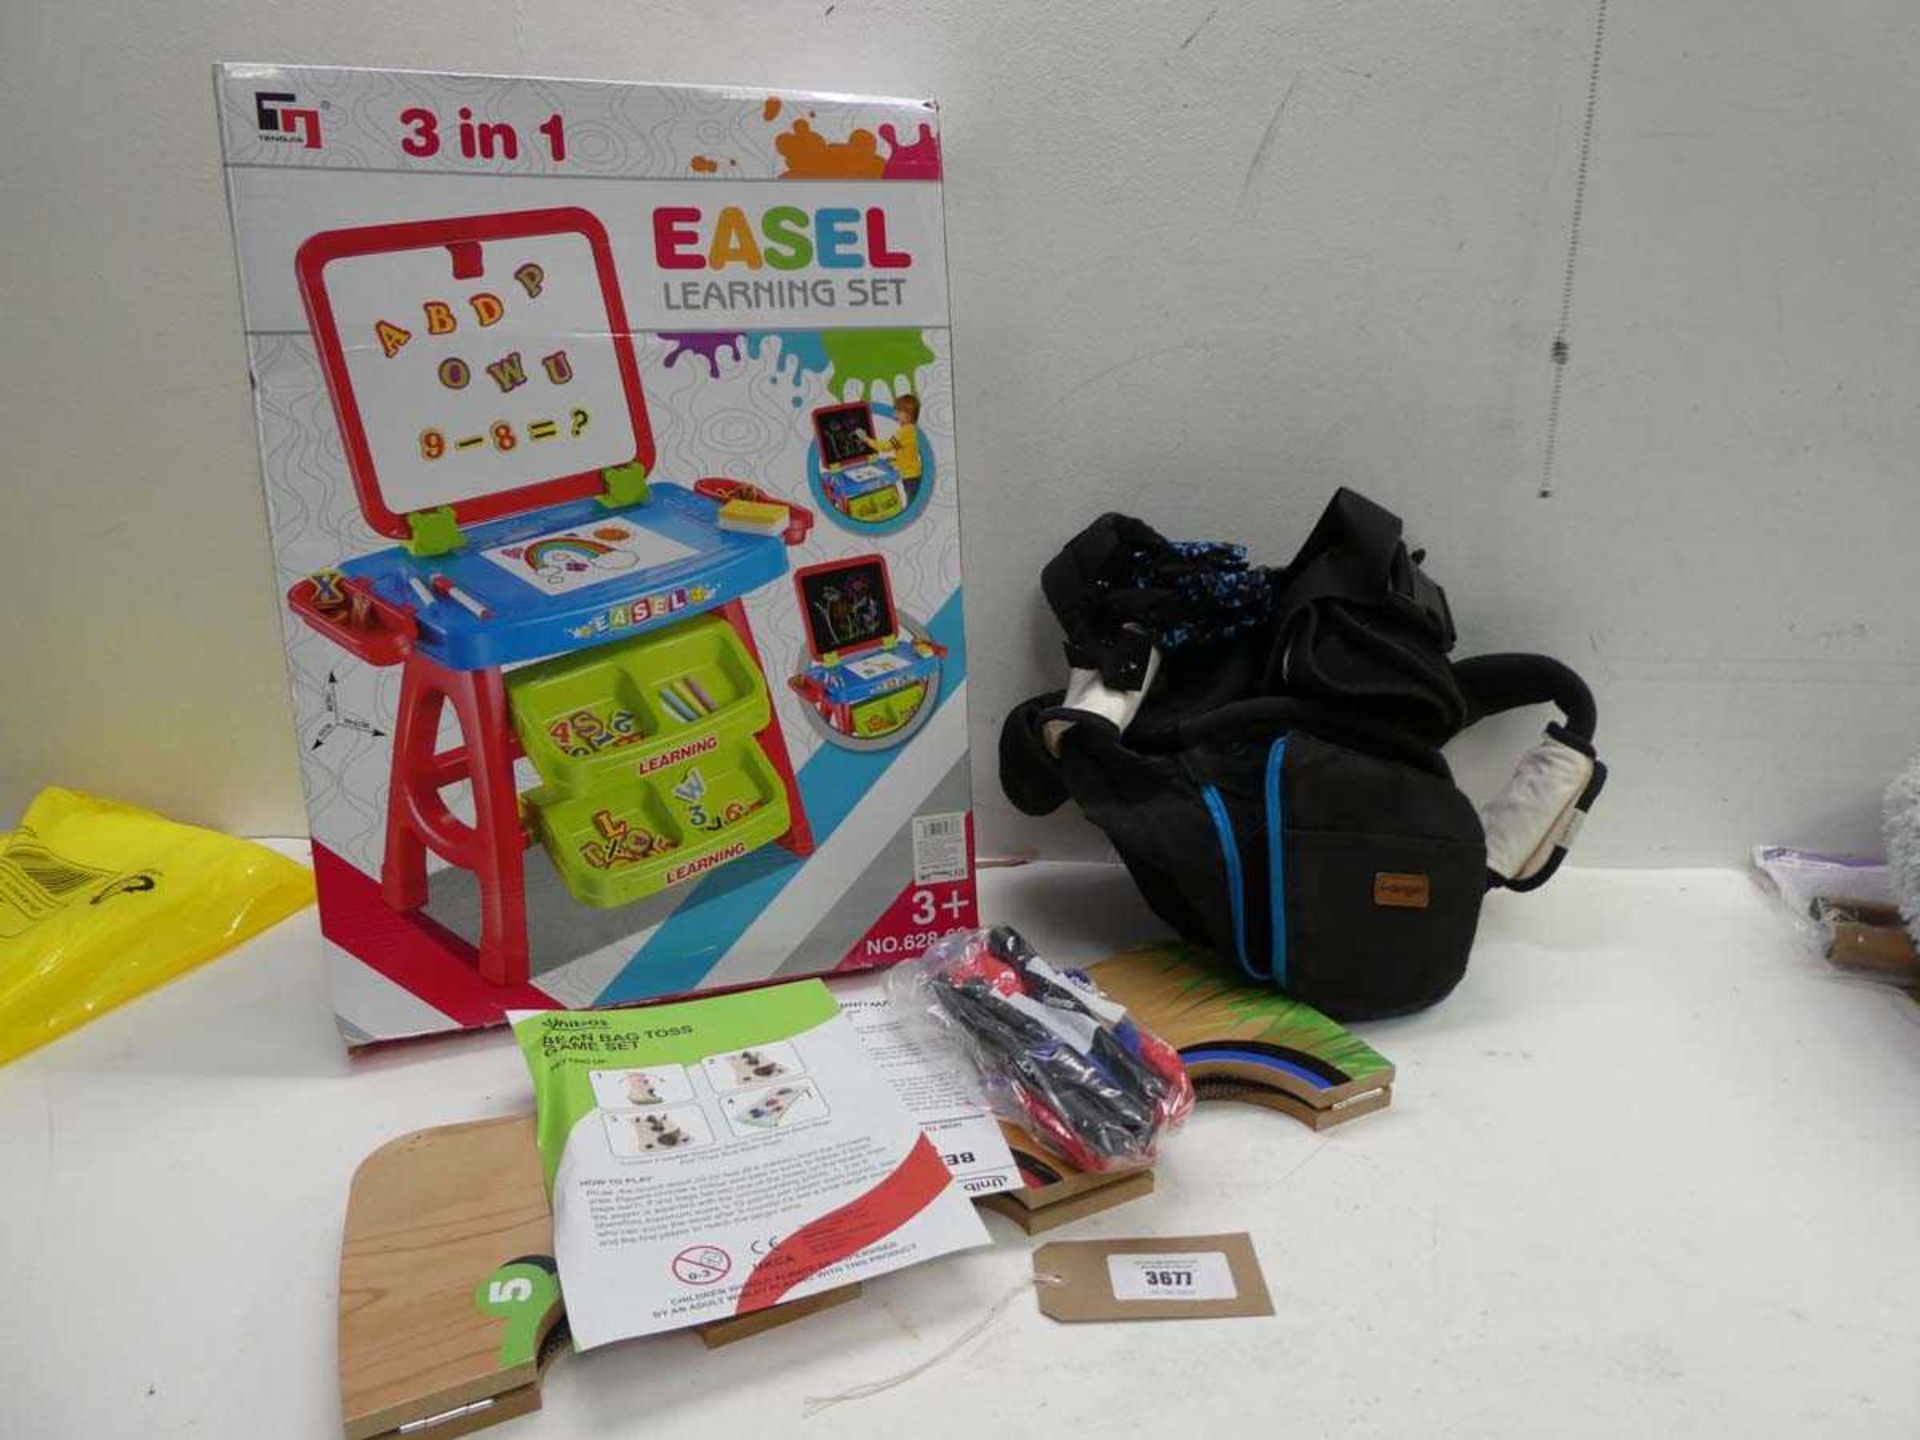 +VAT Easel 3 in 1 learning set, Bean bag toss game set and i-angel baby carrier